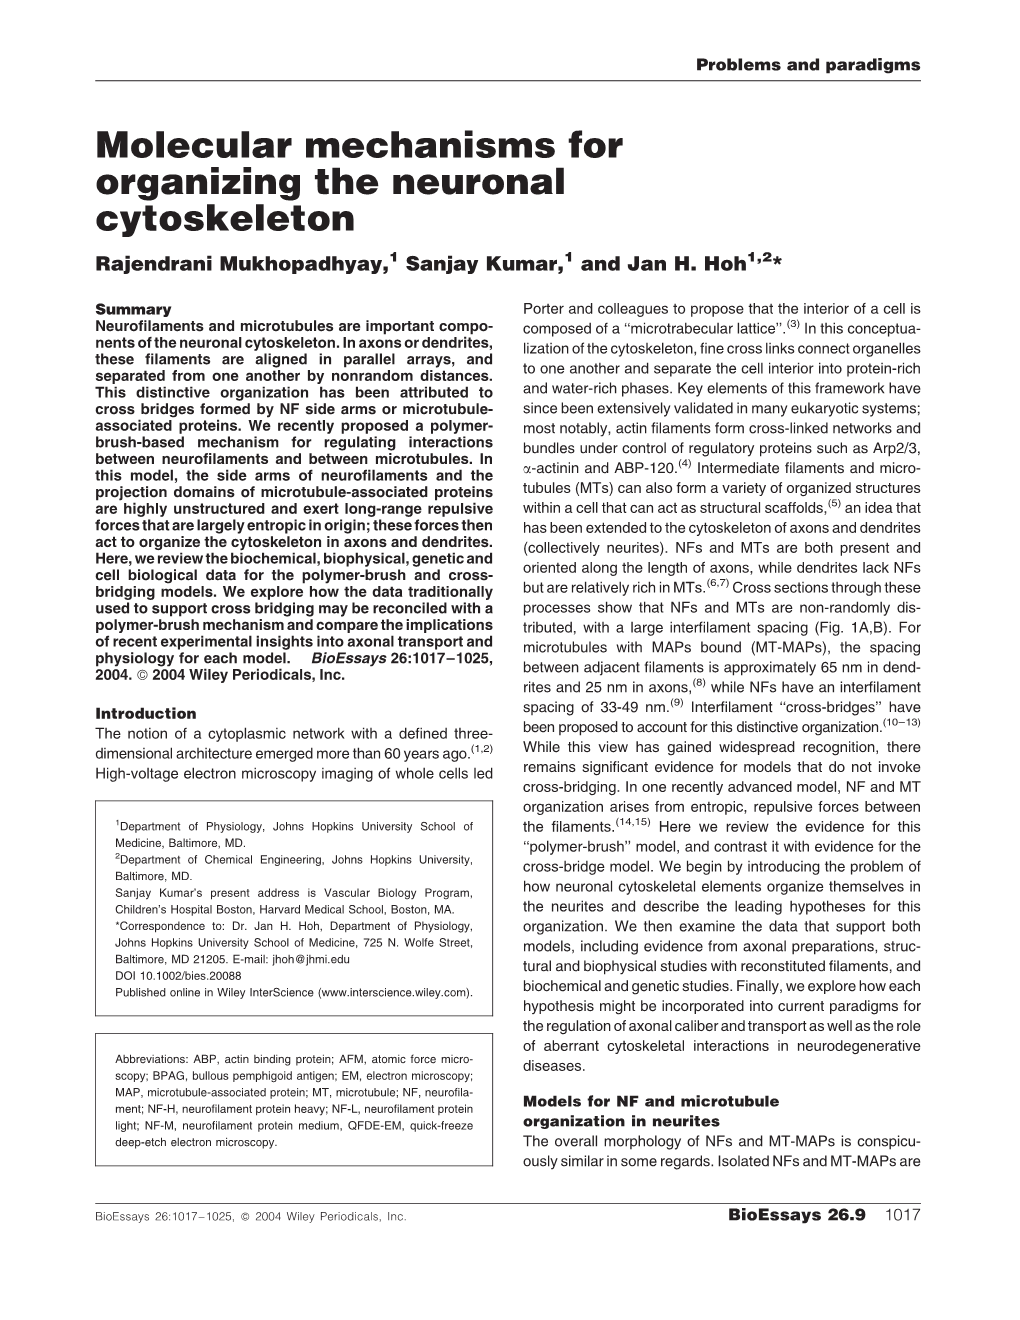 Molecular Mechanisms for Organizing the Neuronal Cytoskeleton Rajendrani Mukhopadhyay,1 Sanjay Kumar,1 and Jan H